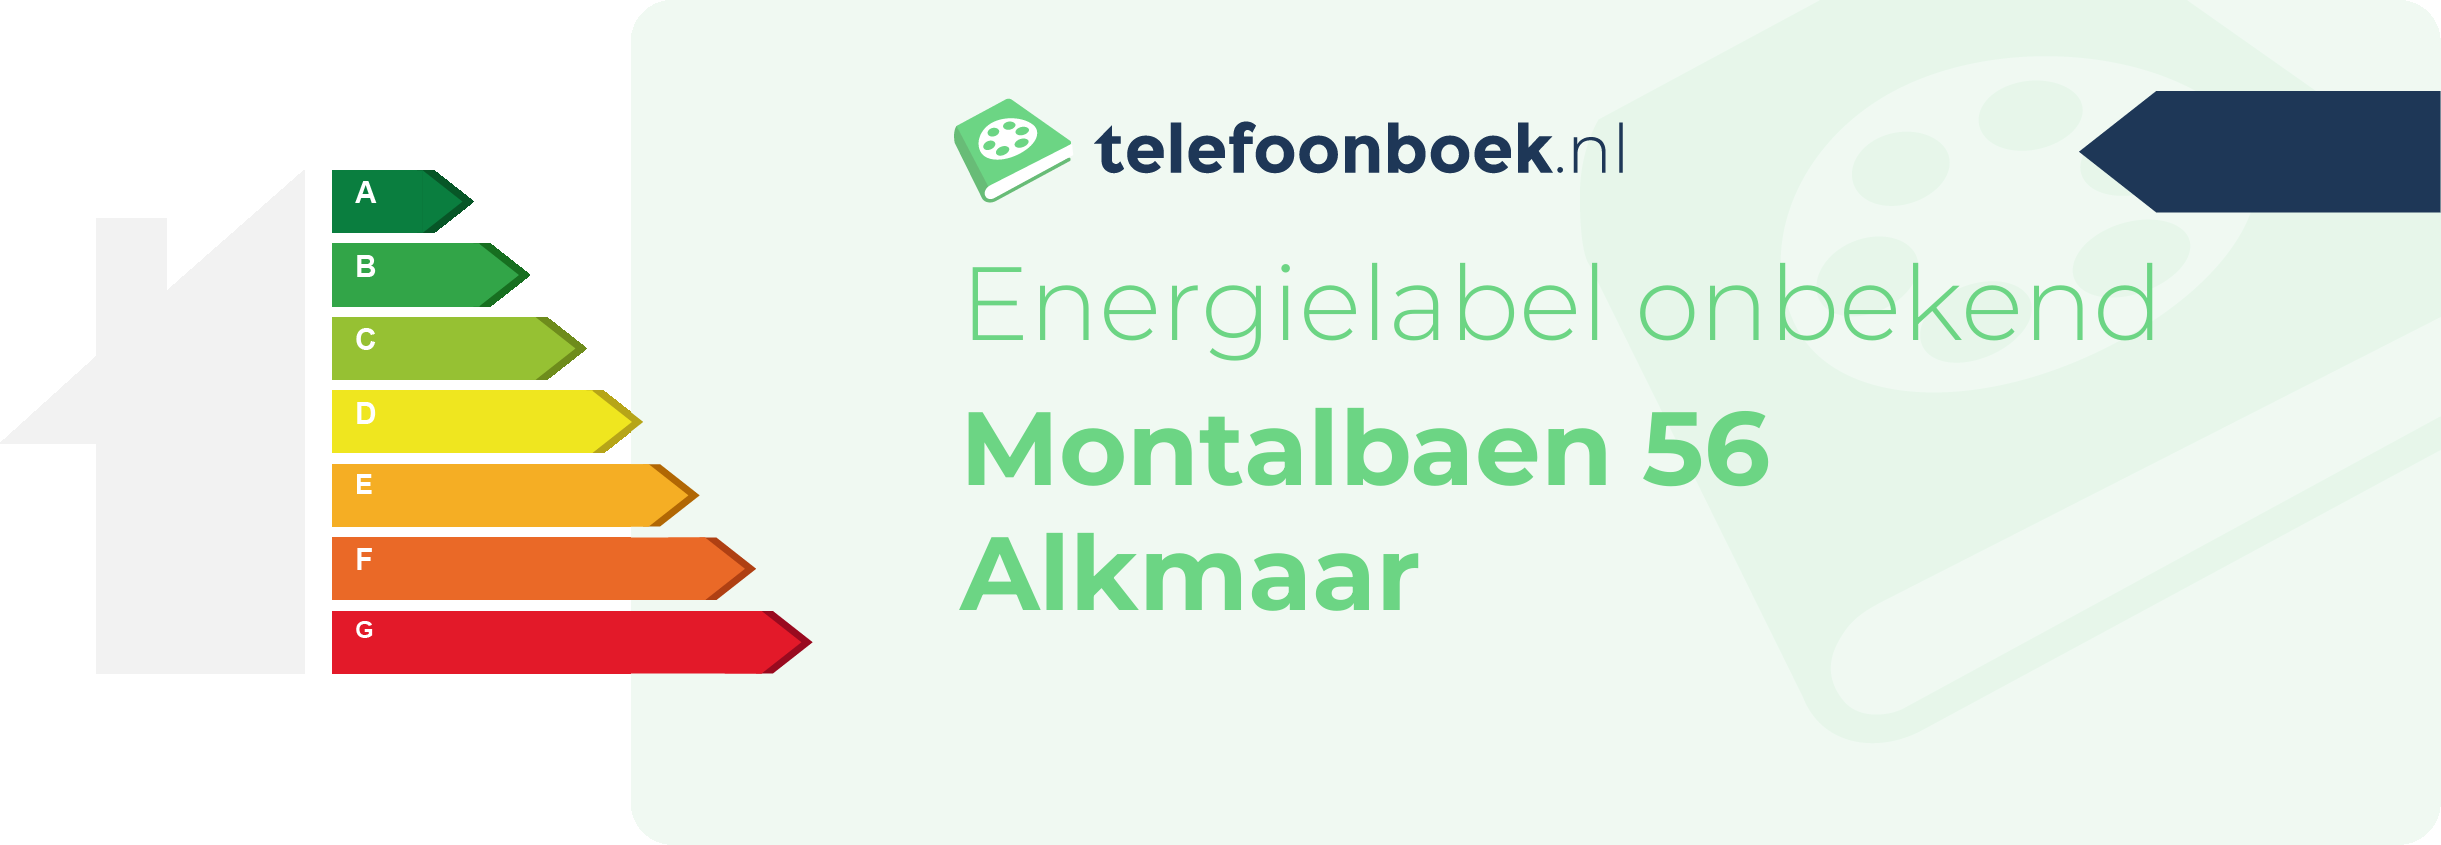 Energielabel Montalbaen 56 Alkmaar